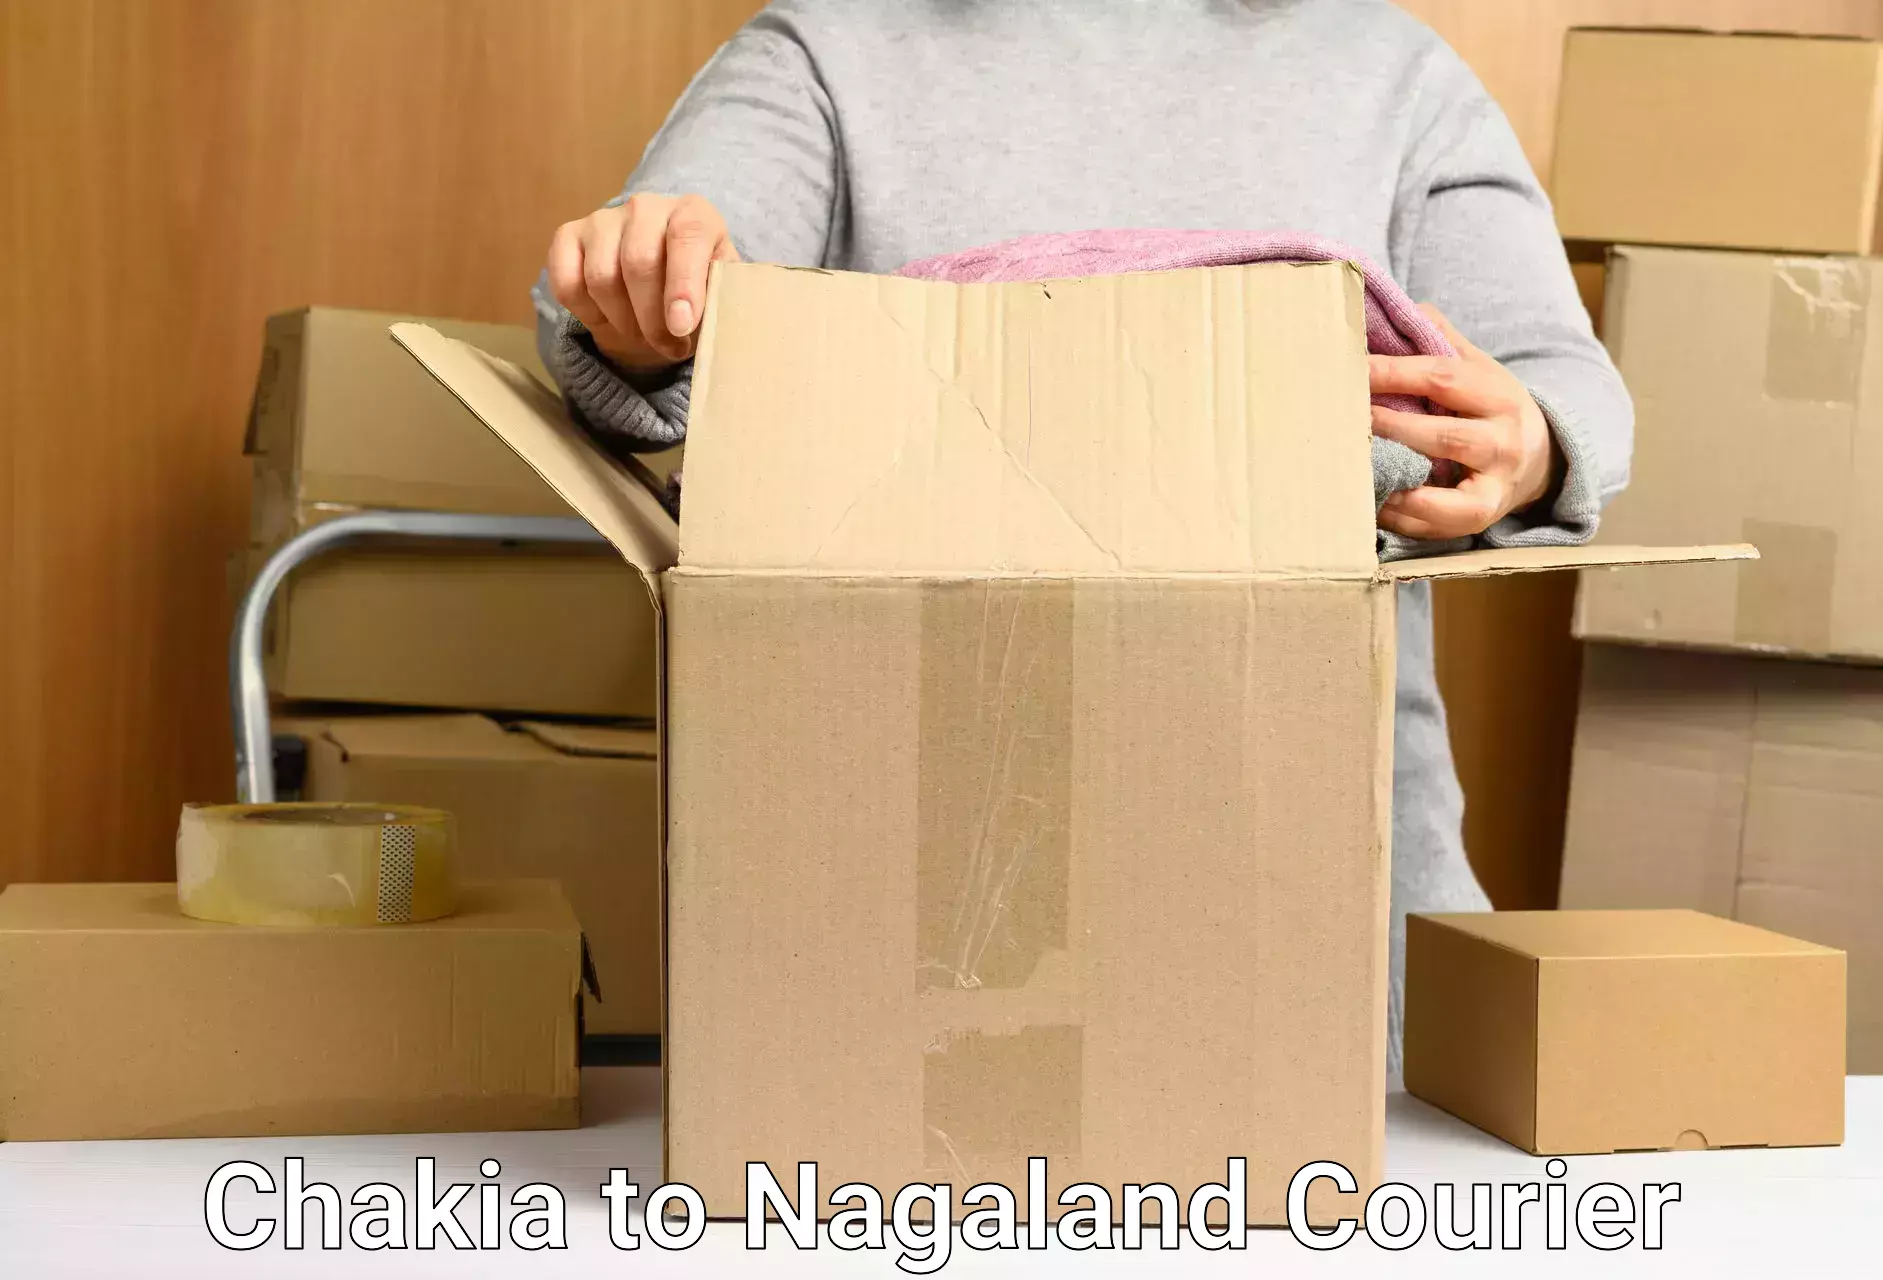 Business shipping needs Chakia to Nagaland